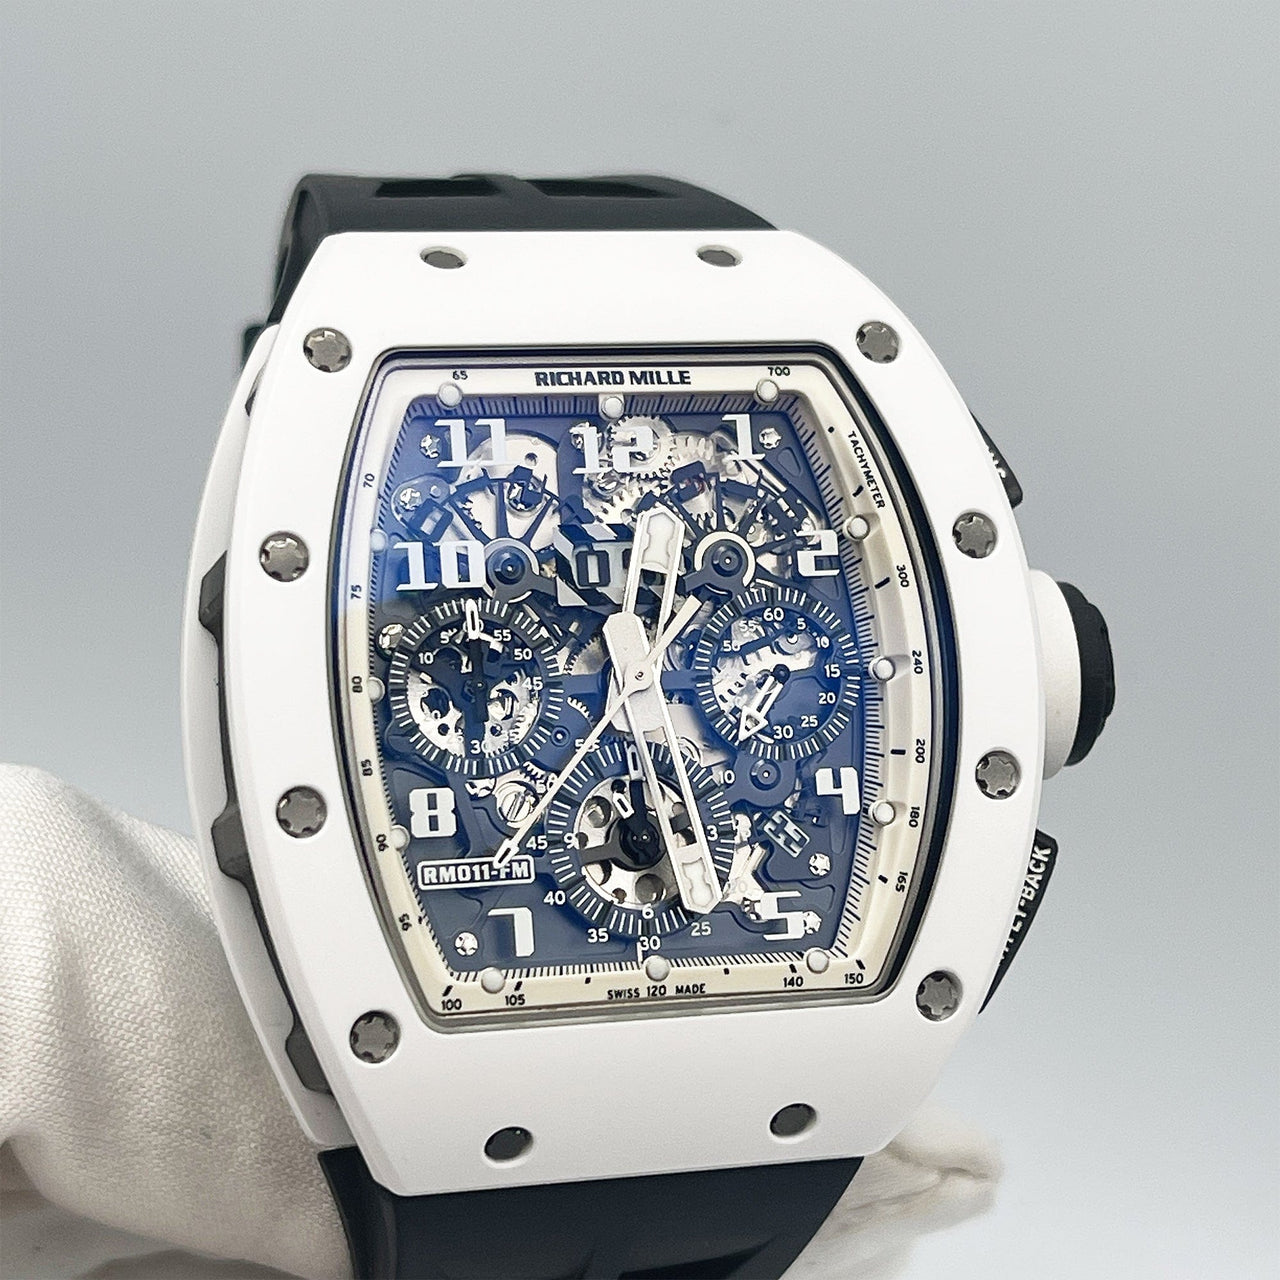 Luxury Watch Richard Mille White Ghost Ceramic Limited Edition RM011-FM Wrist Aficionado